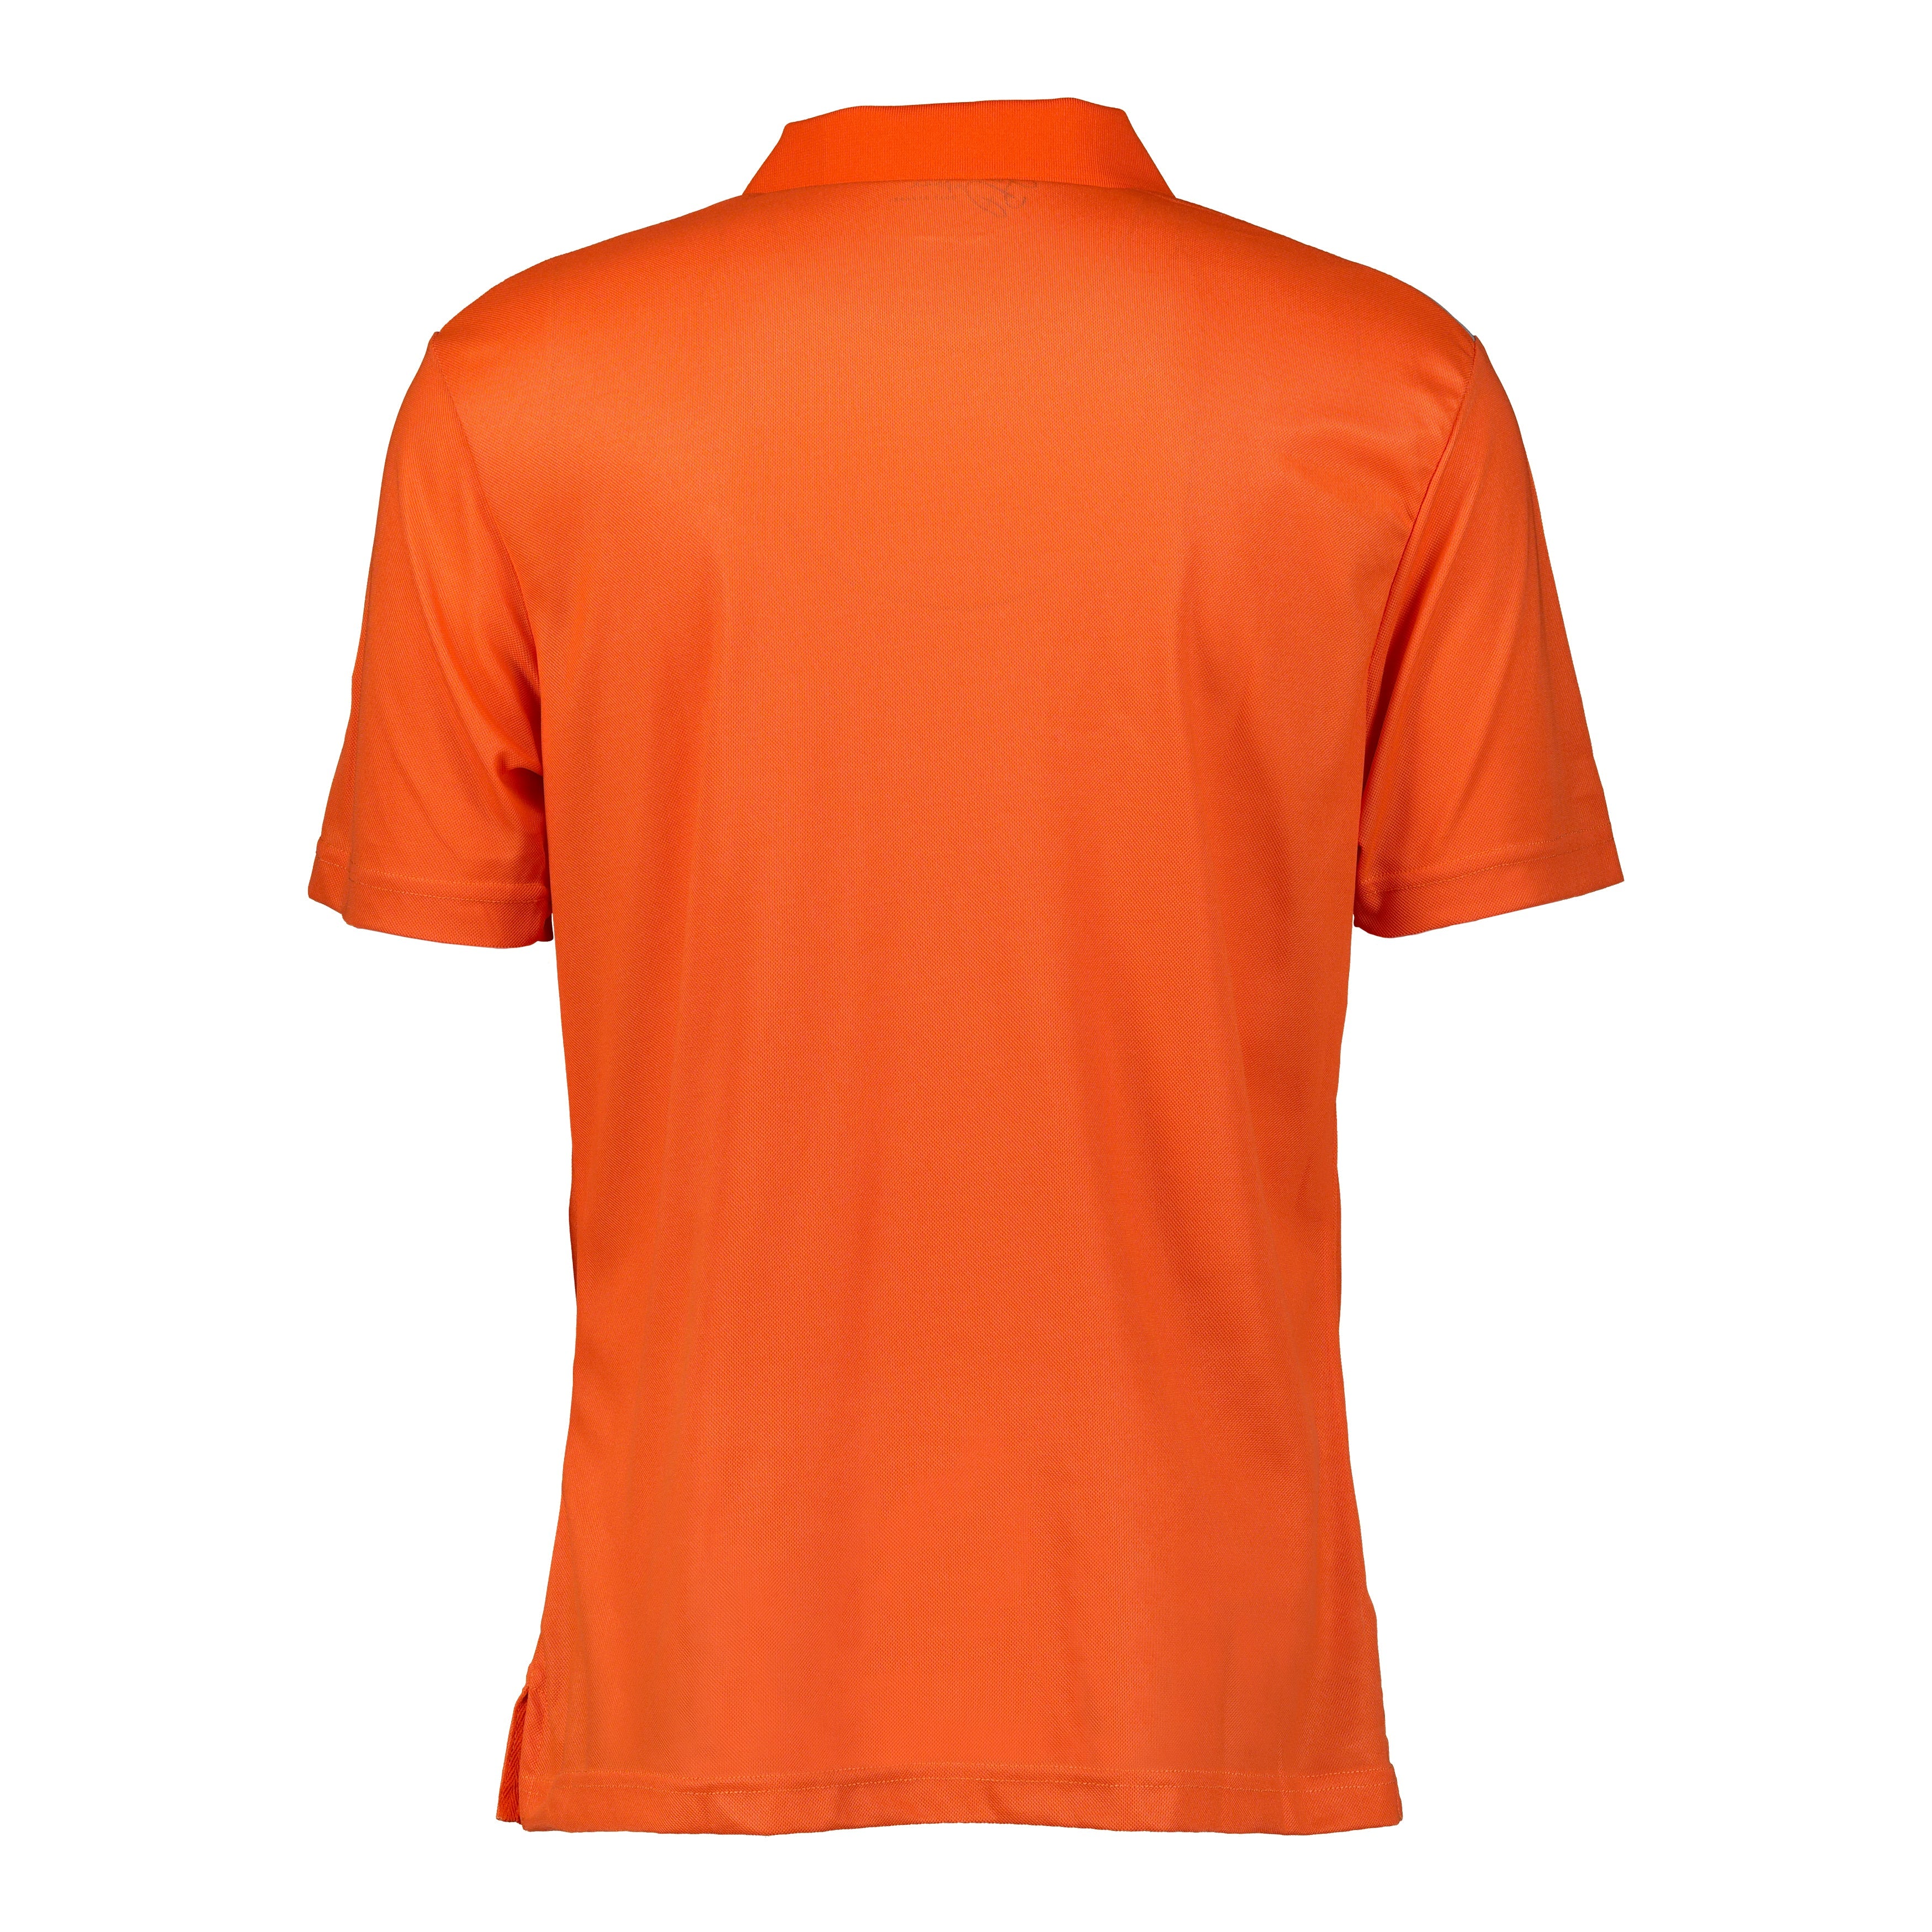 DriFIT Golf Shirts Men’s Contrasting Shoulder My Golf Shirts